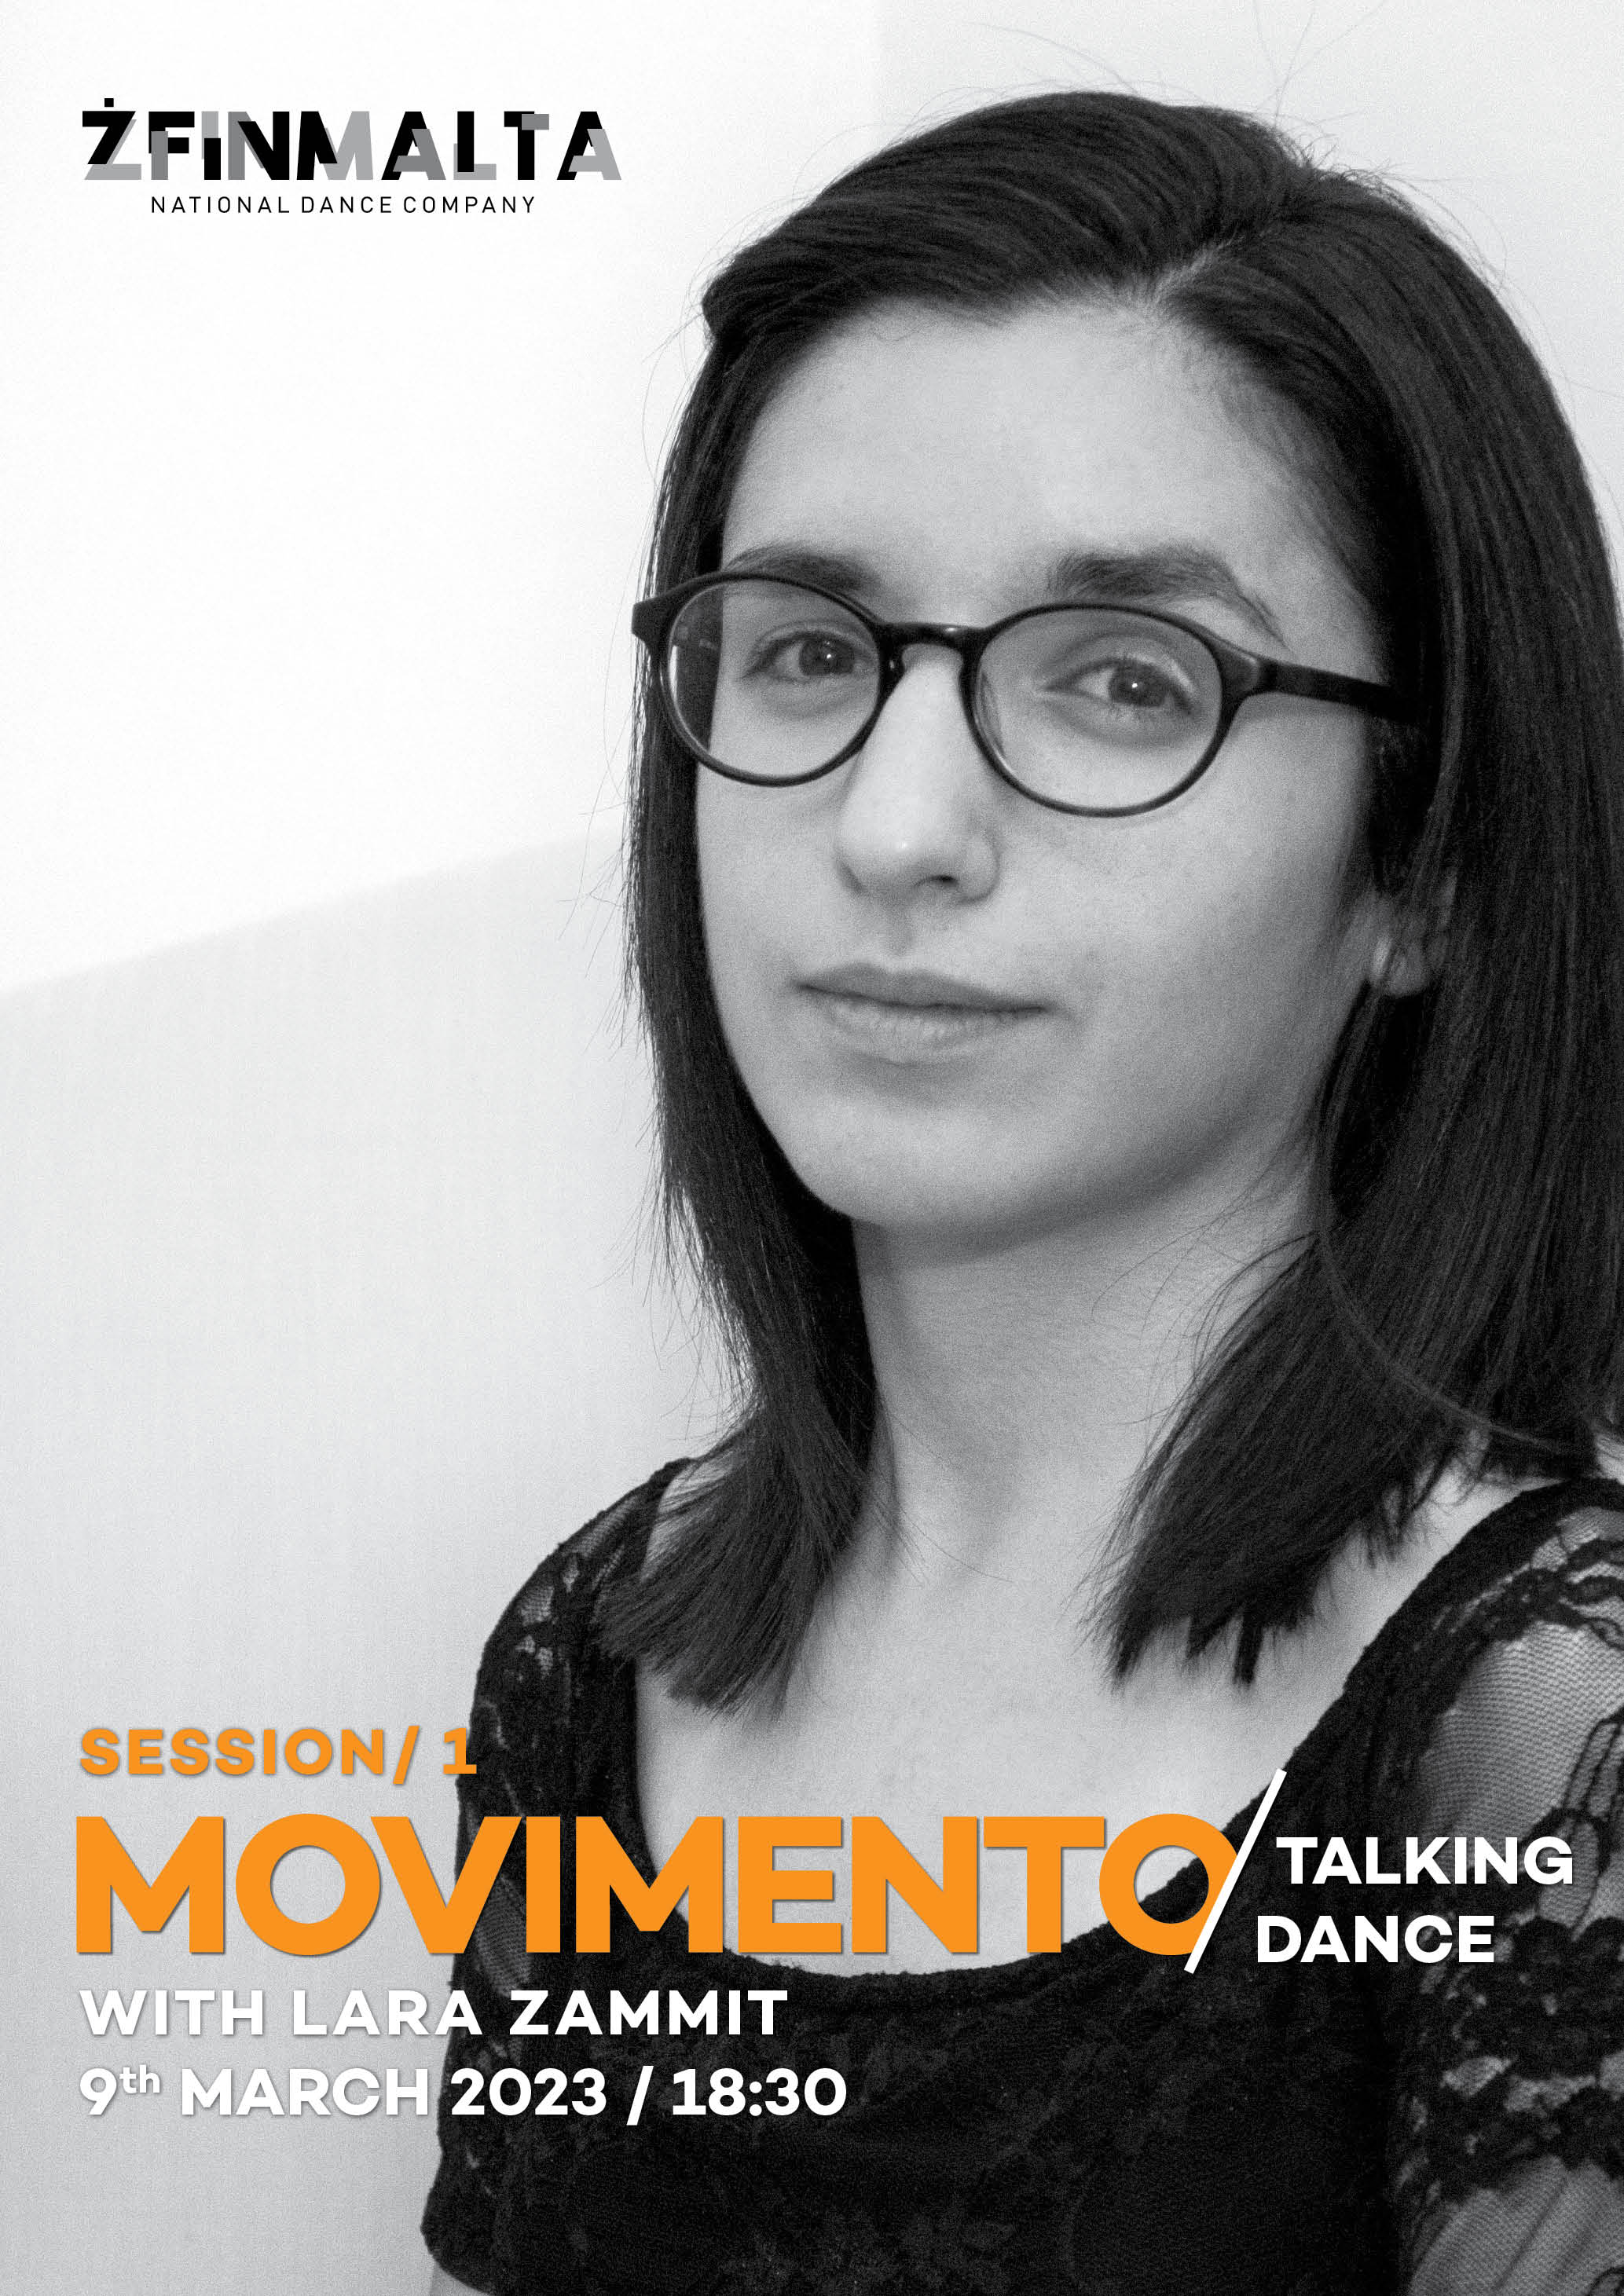 ŻfinMalta's Movimento with Lara Zammit: Writing for movement poster